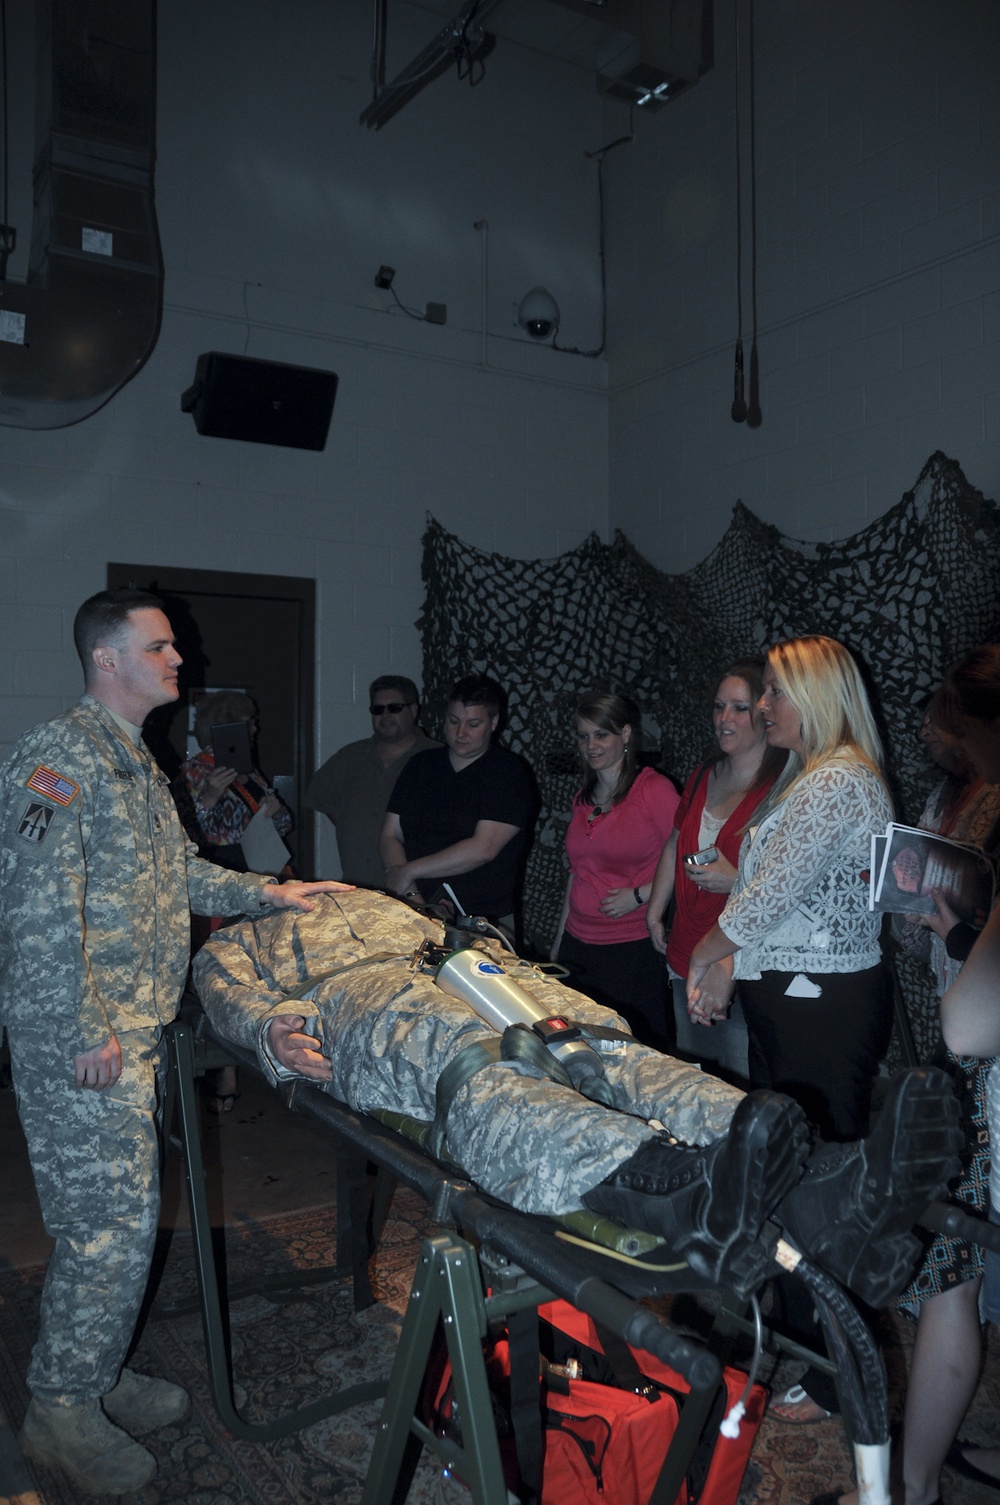 Medical Simulation Training Center dedicated in memory of Staff Sgt. Richard A. Blakley